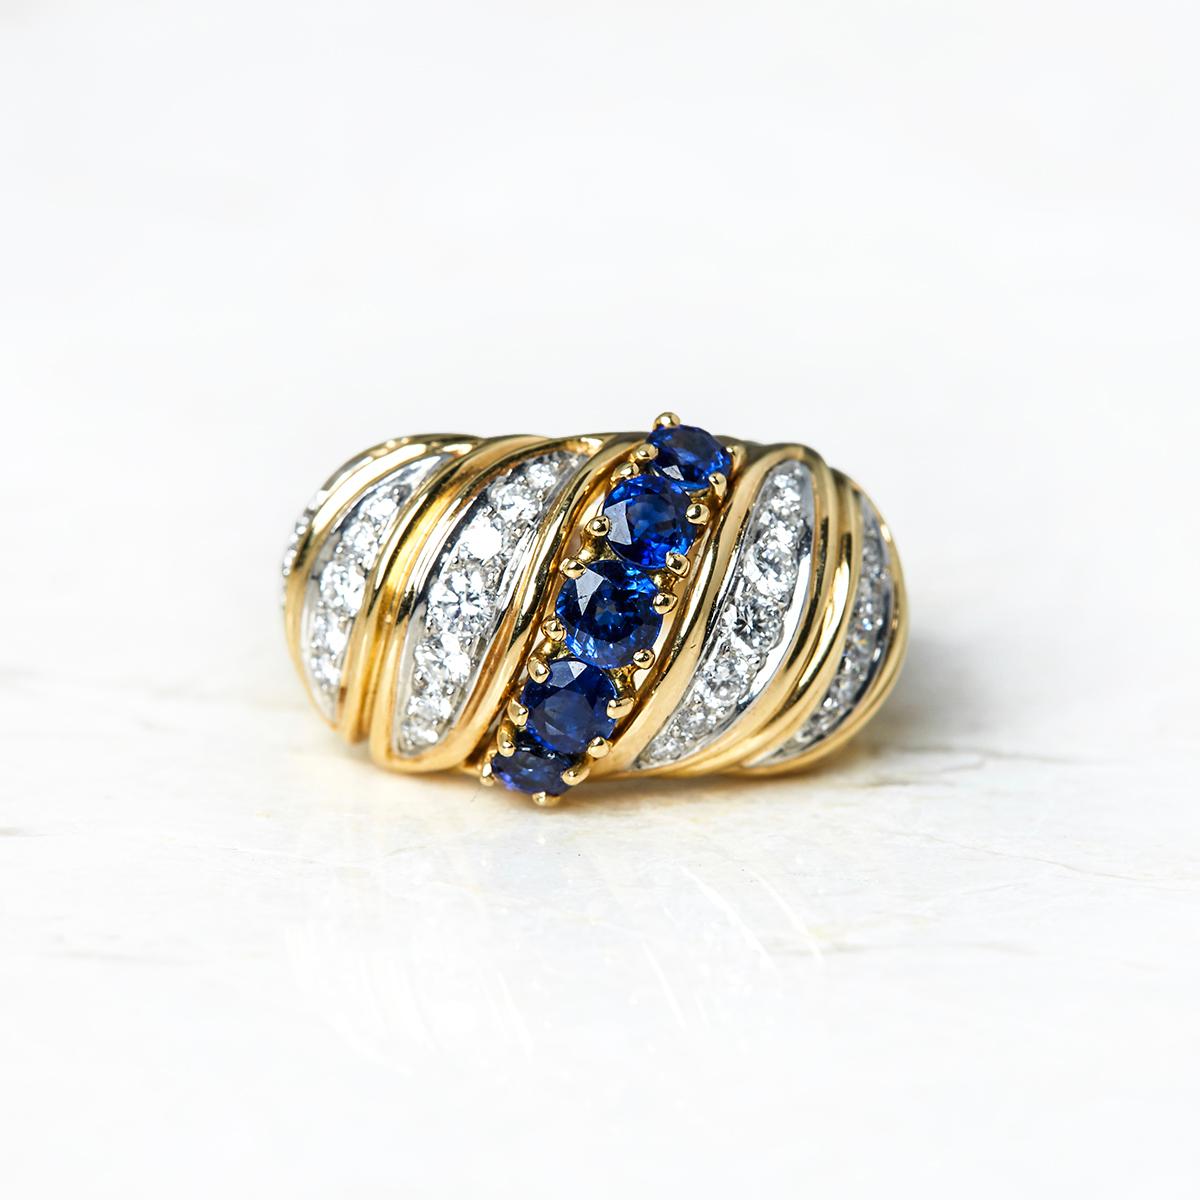 Code: J389
Brand: Tiffany & Co.
Description: 18k Yellow Gold 0.75ct Sapphire & 1.10ct Diamond Ring
Accompanied With: Presentation Box
Gender: Ladies
UK Ring Size: K 1/2
EU Ring Size: 51
US Ring Size: 5 1/2
Resizing Possible?: YES
Band Width: